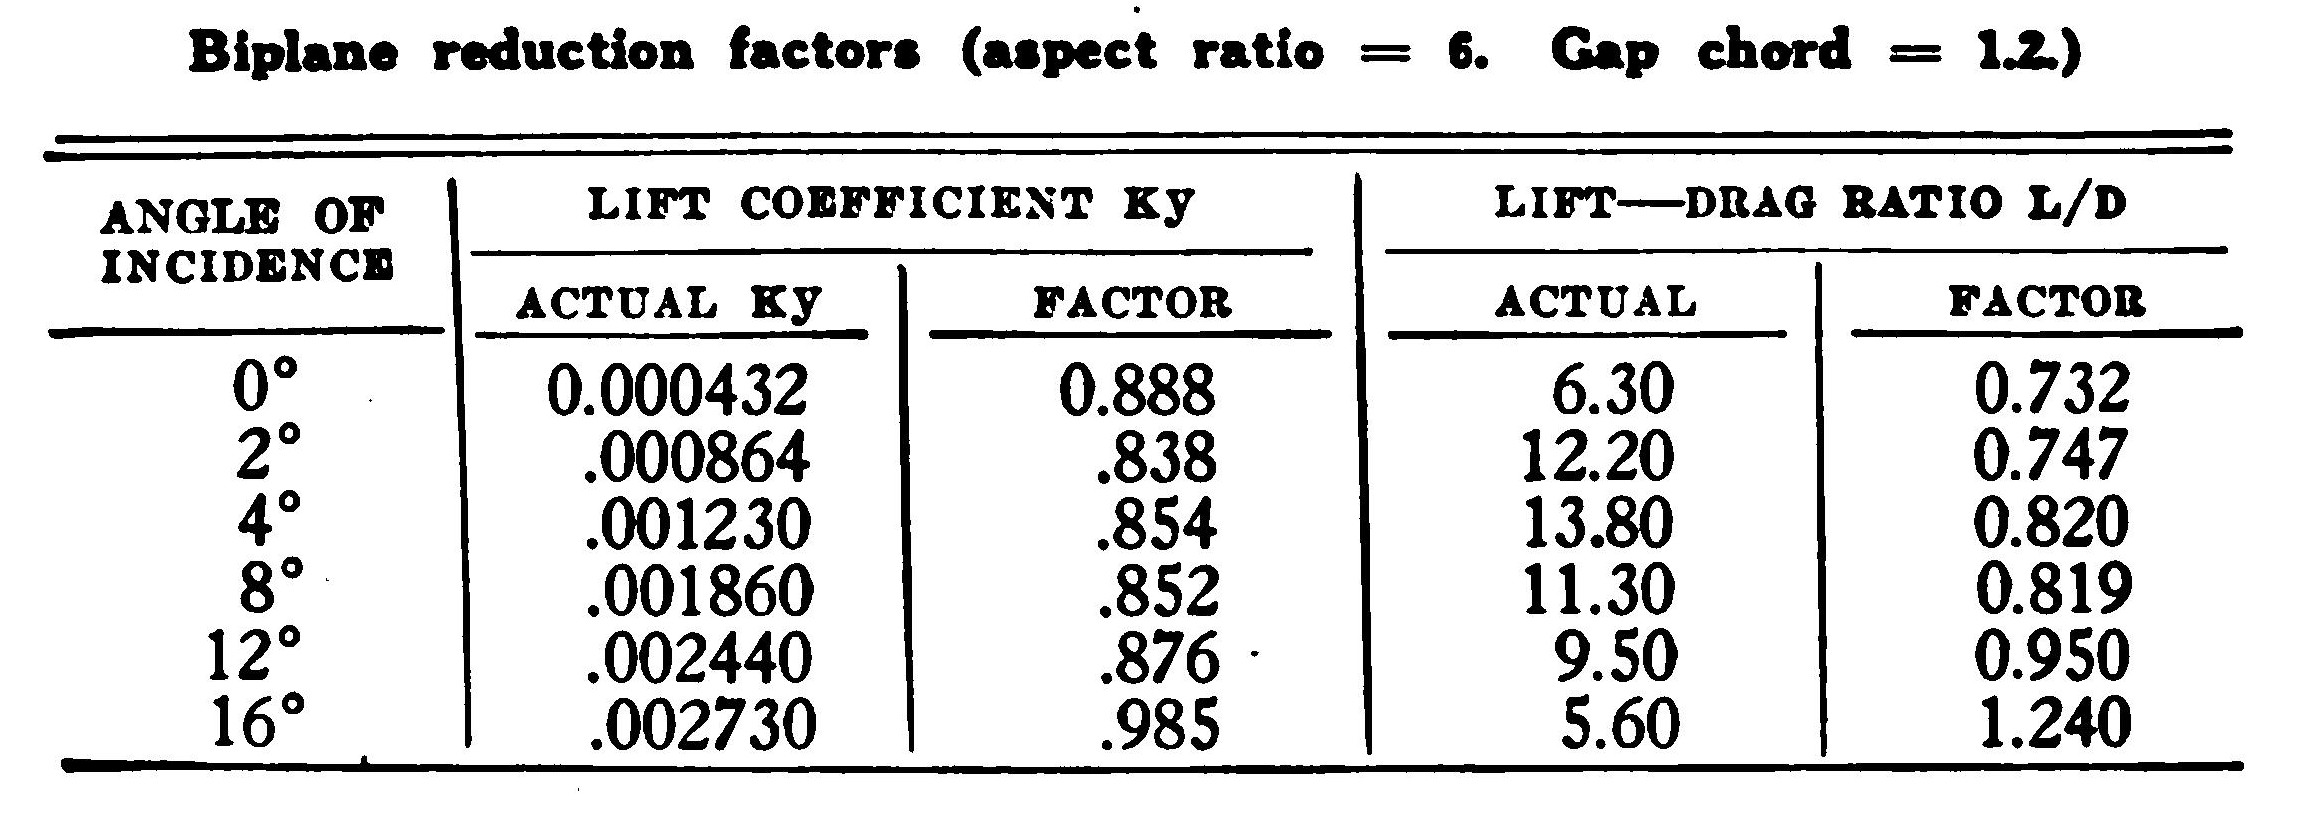 Table of Biplane reduction factors (aspect ratio = 6. Gap chord = 1.2.)